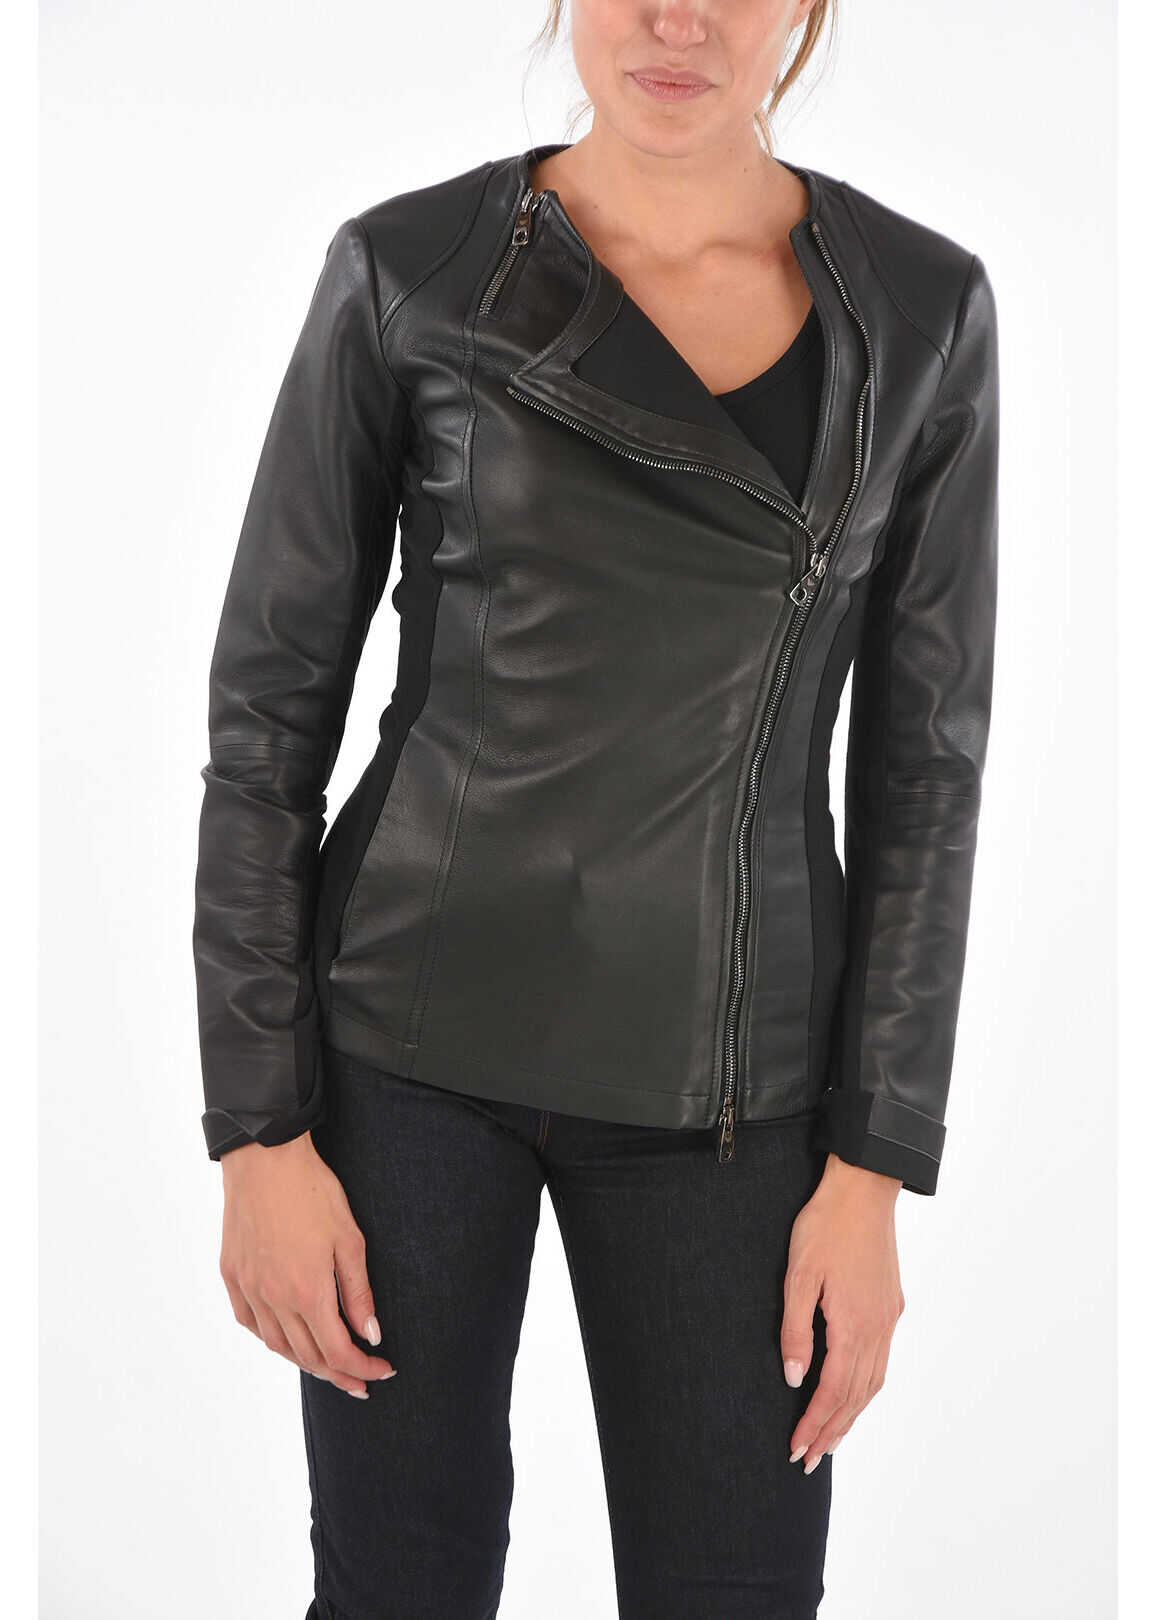 Armani Emporio Leather Skinny Fit Biker Jacket Black